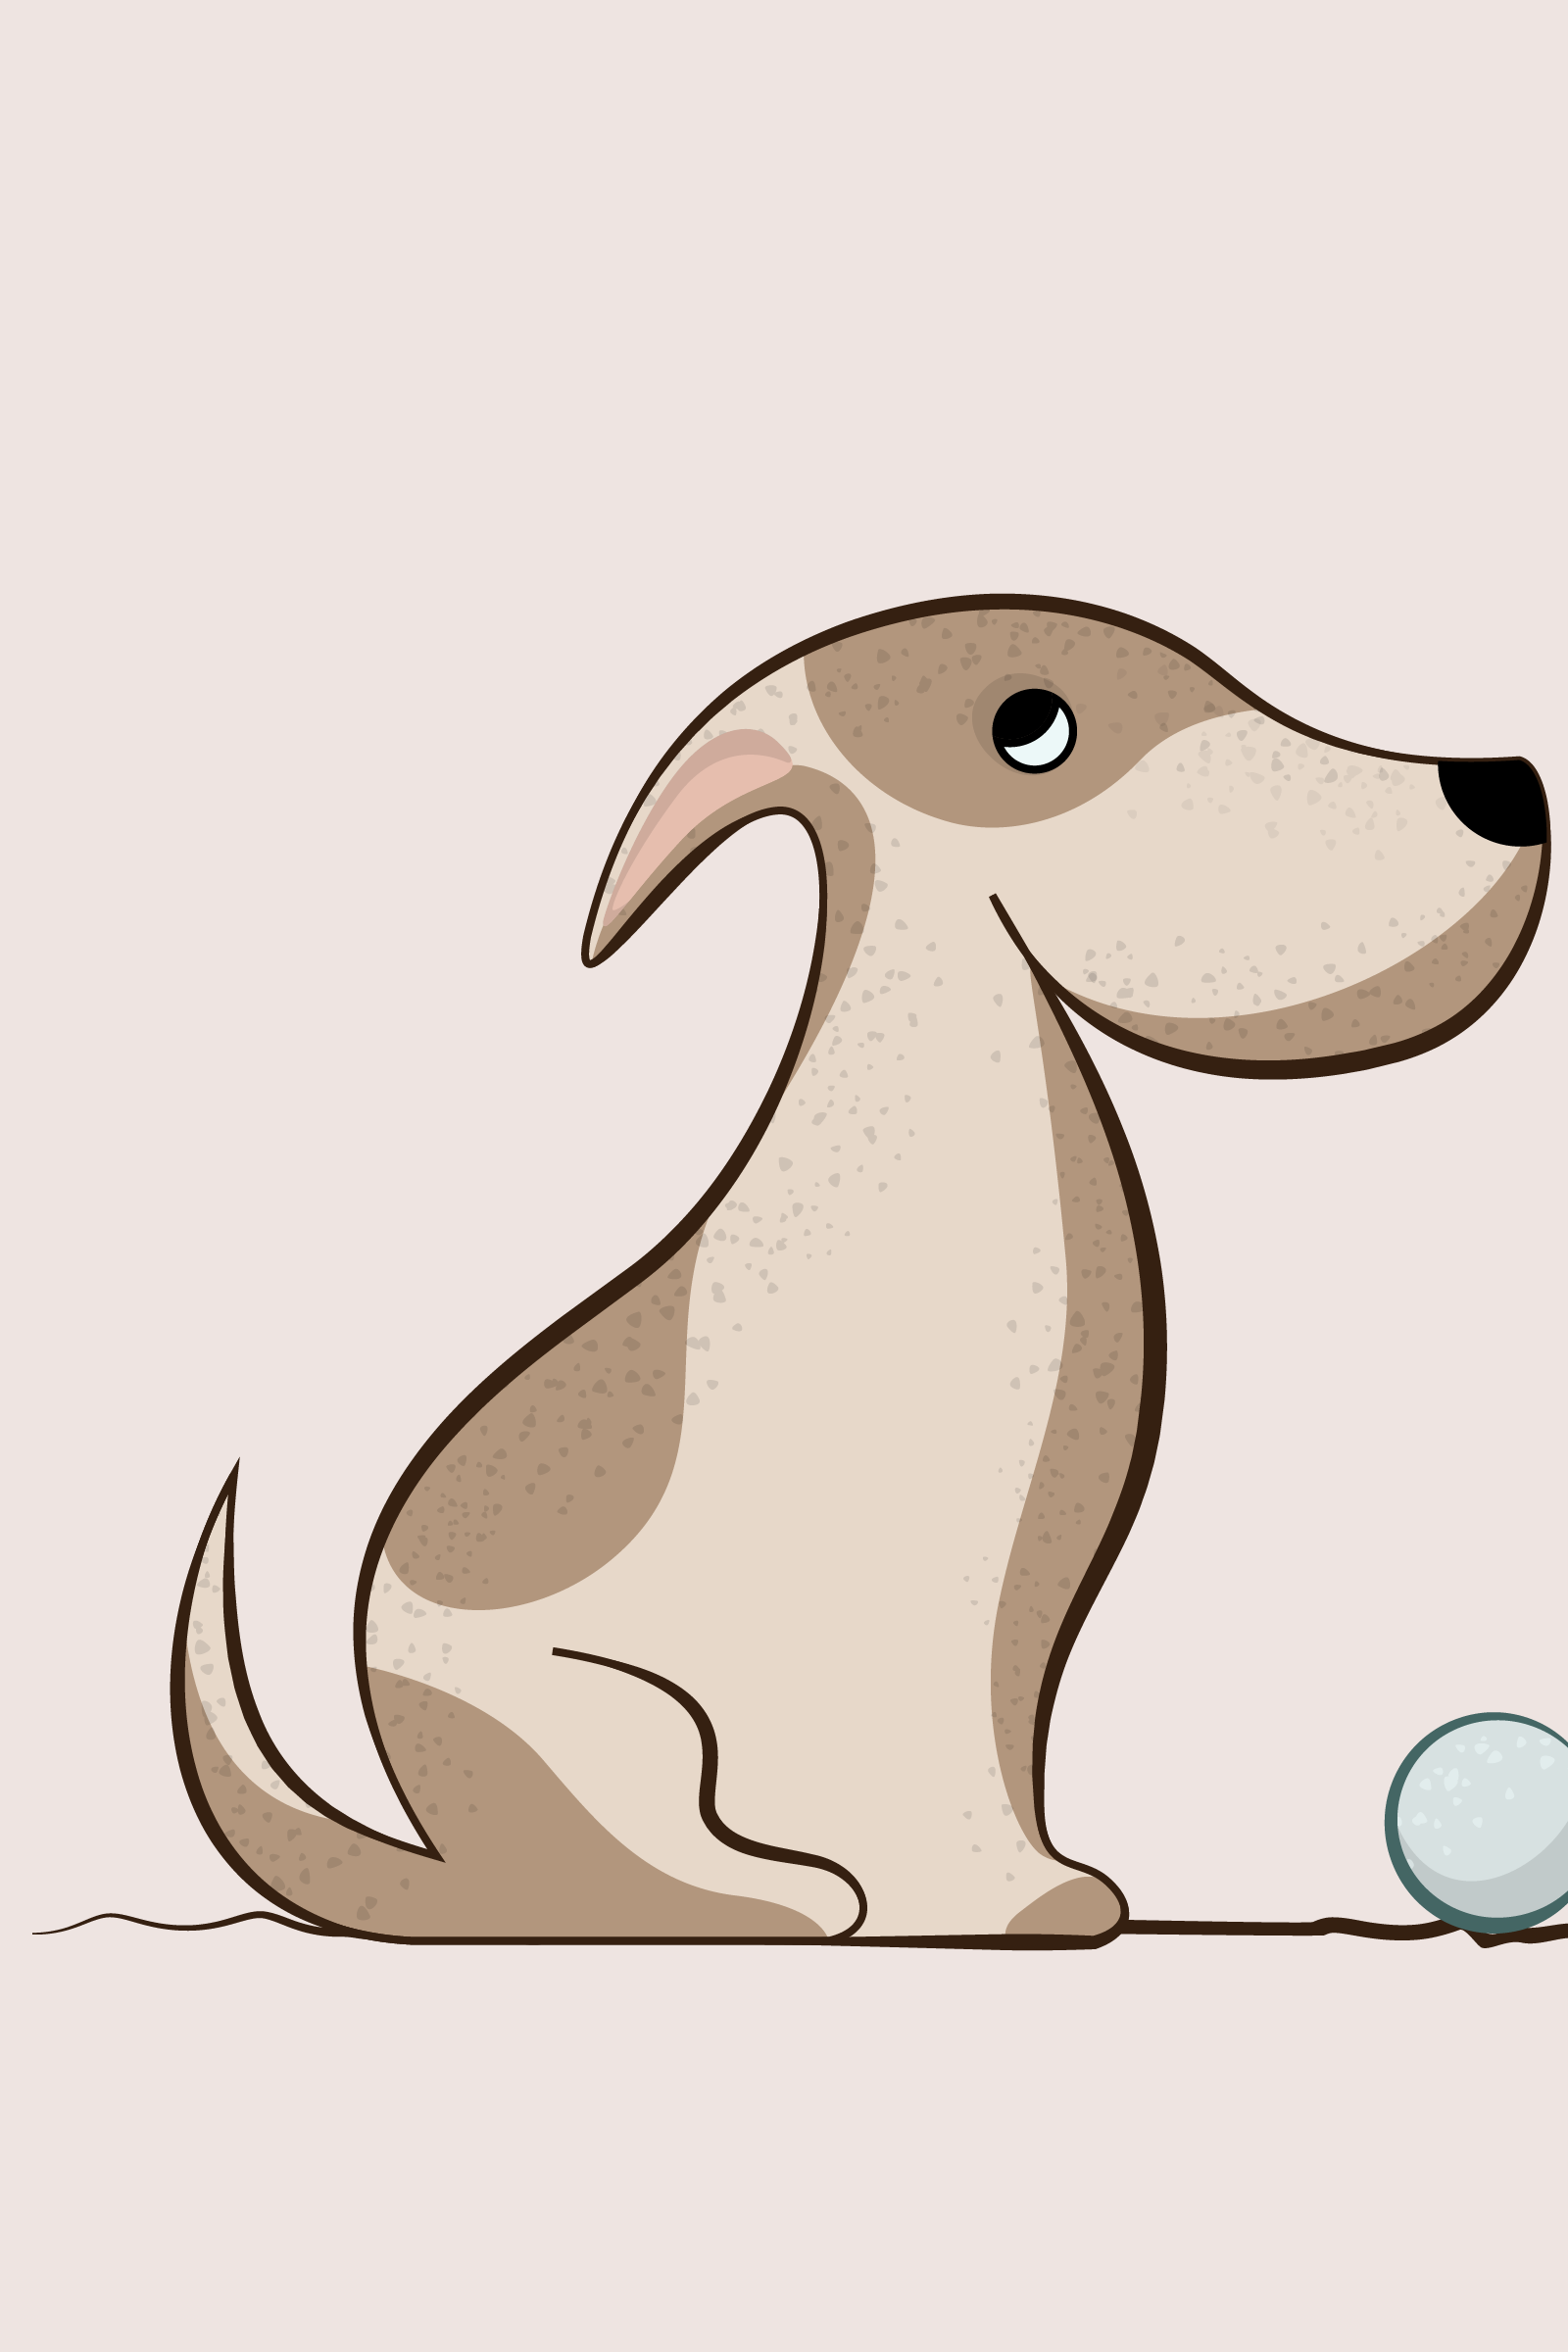 Playful dog illustration by Xavier Wendling